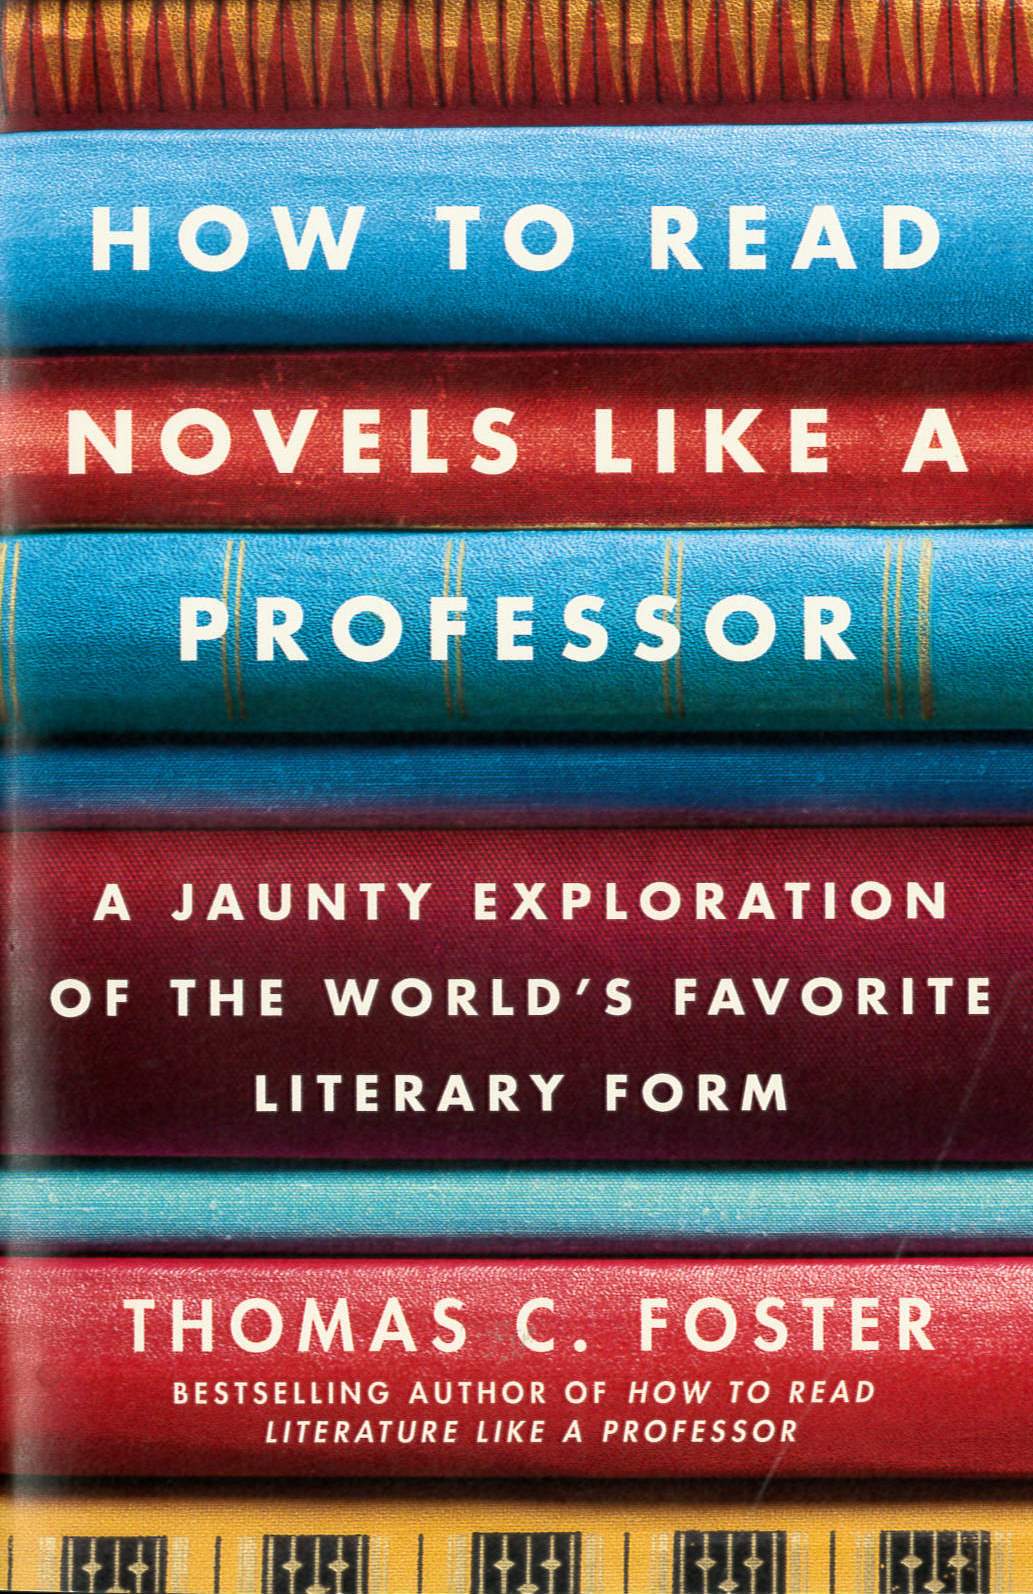 How to read novels like a professor / a jaunty exploration of the world